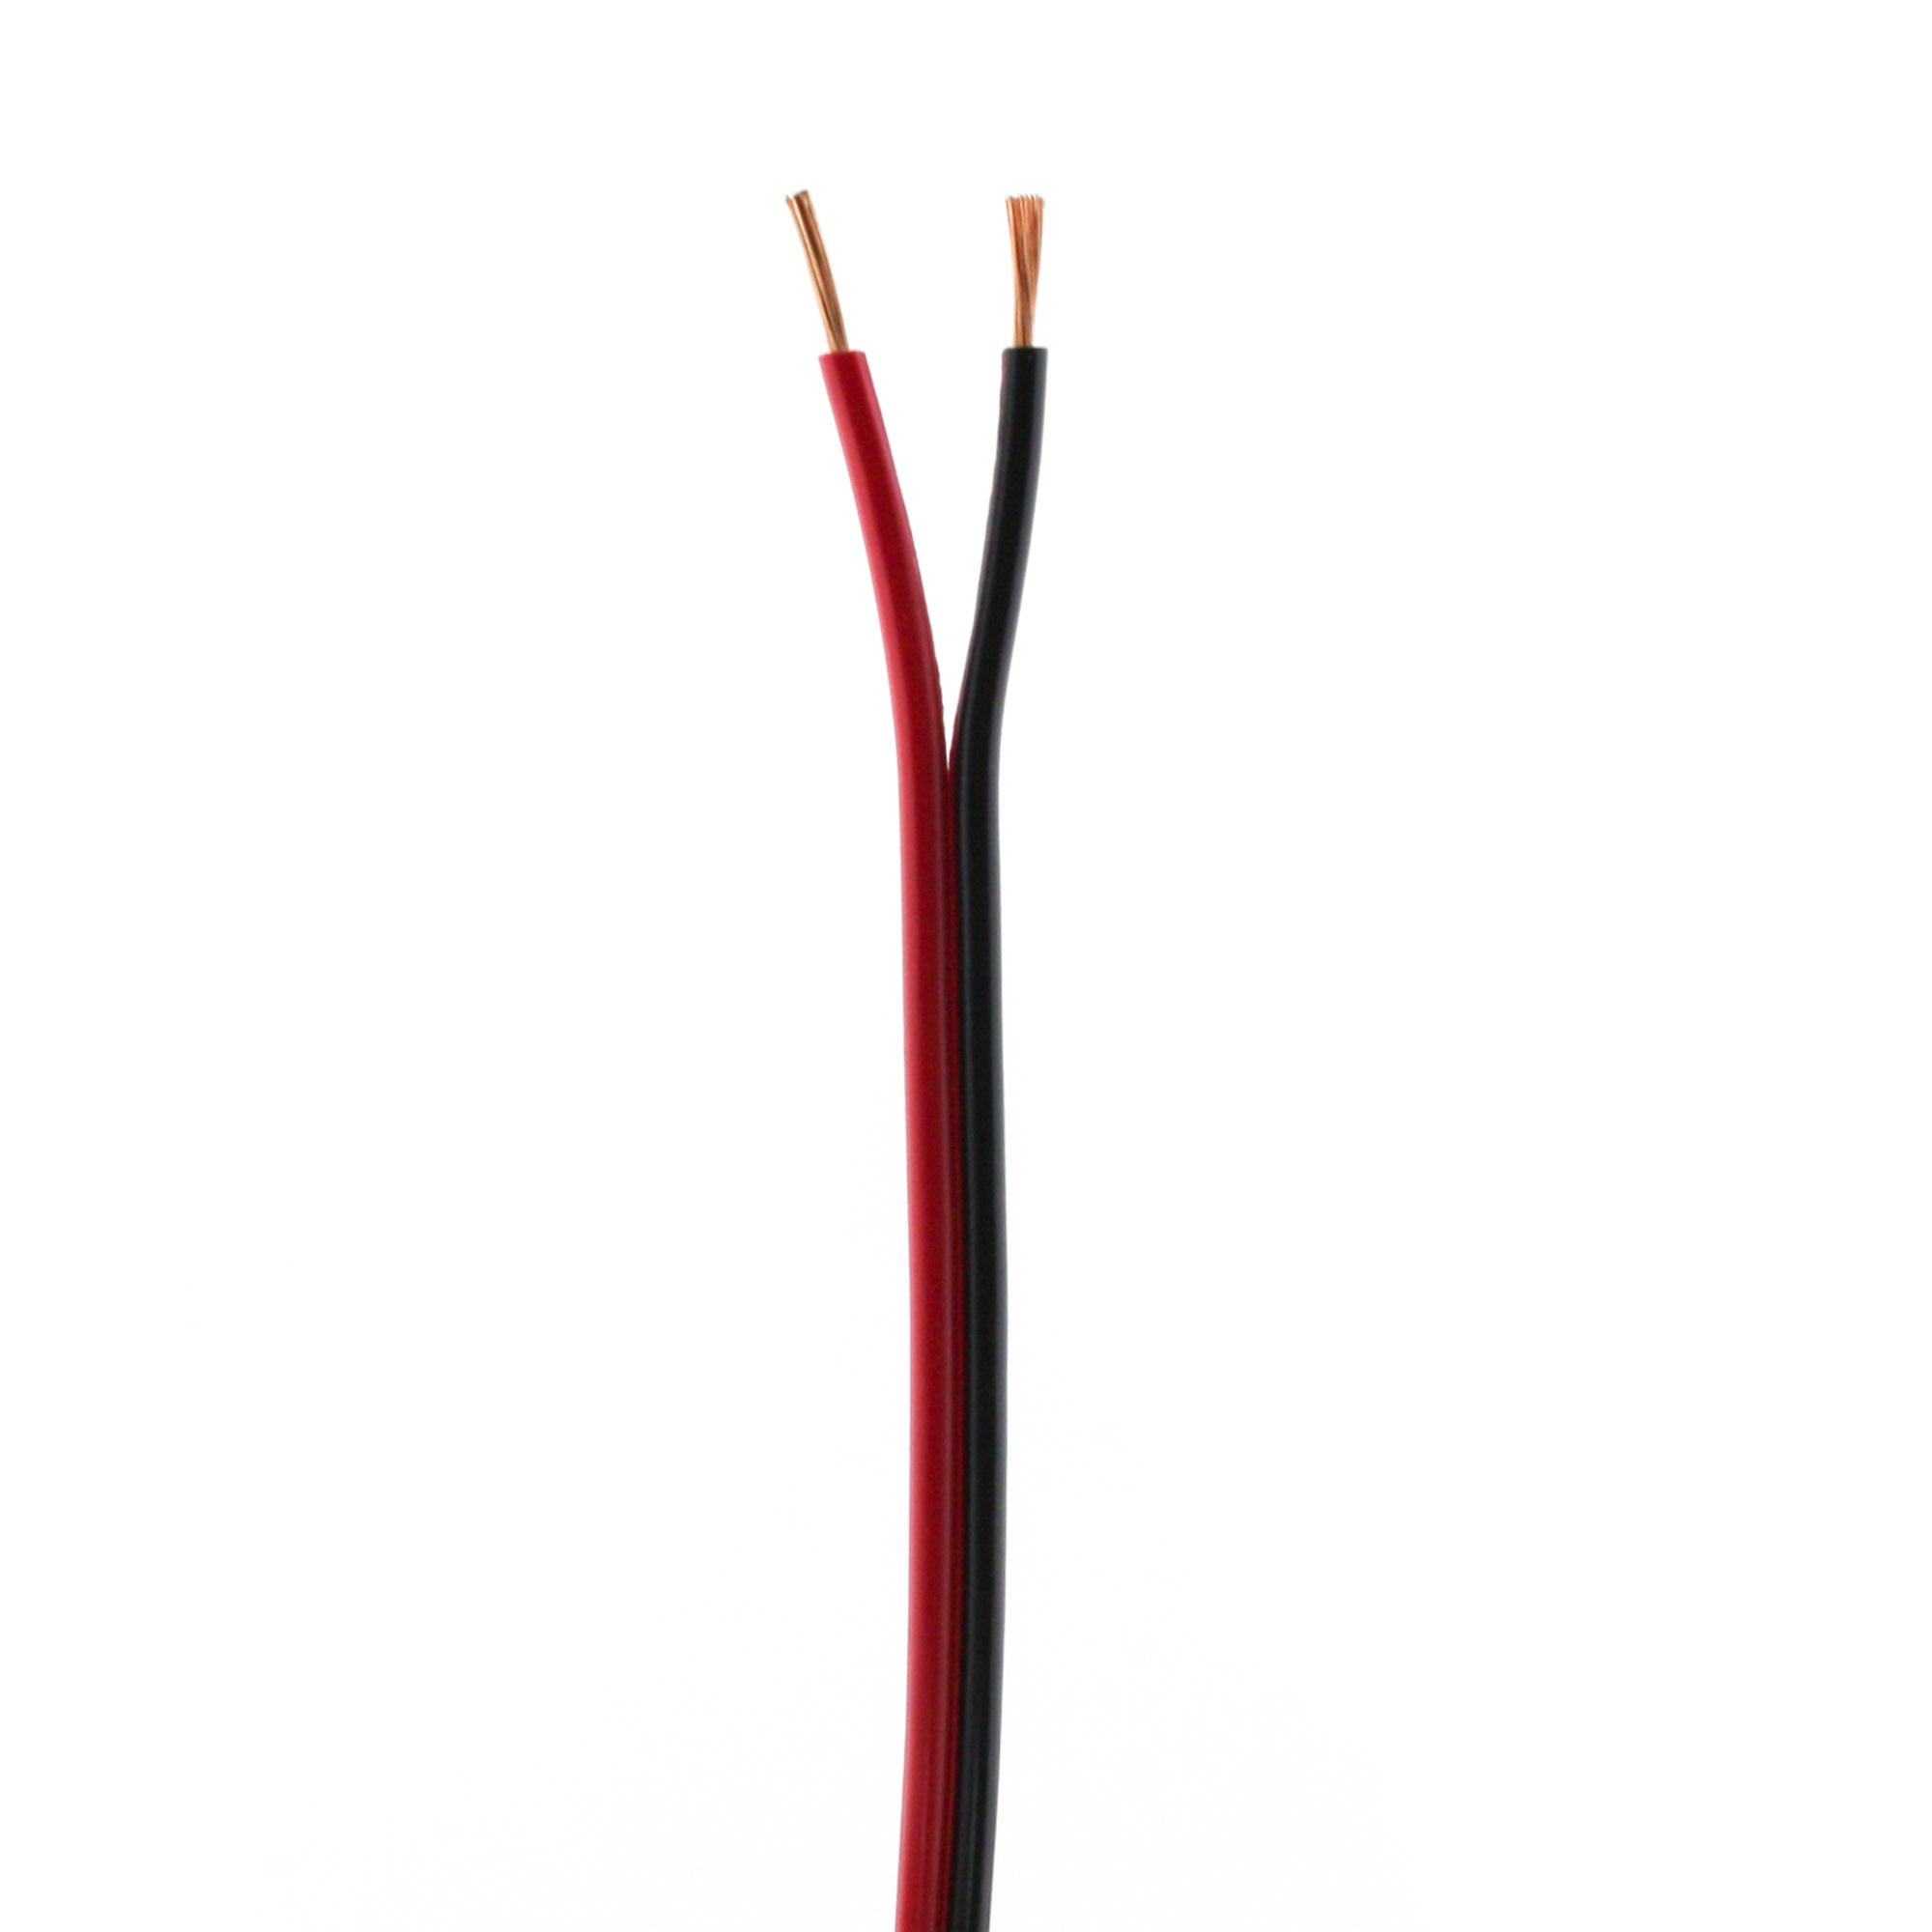 Loudspeaker cable red-black 100m 0.75mm